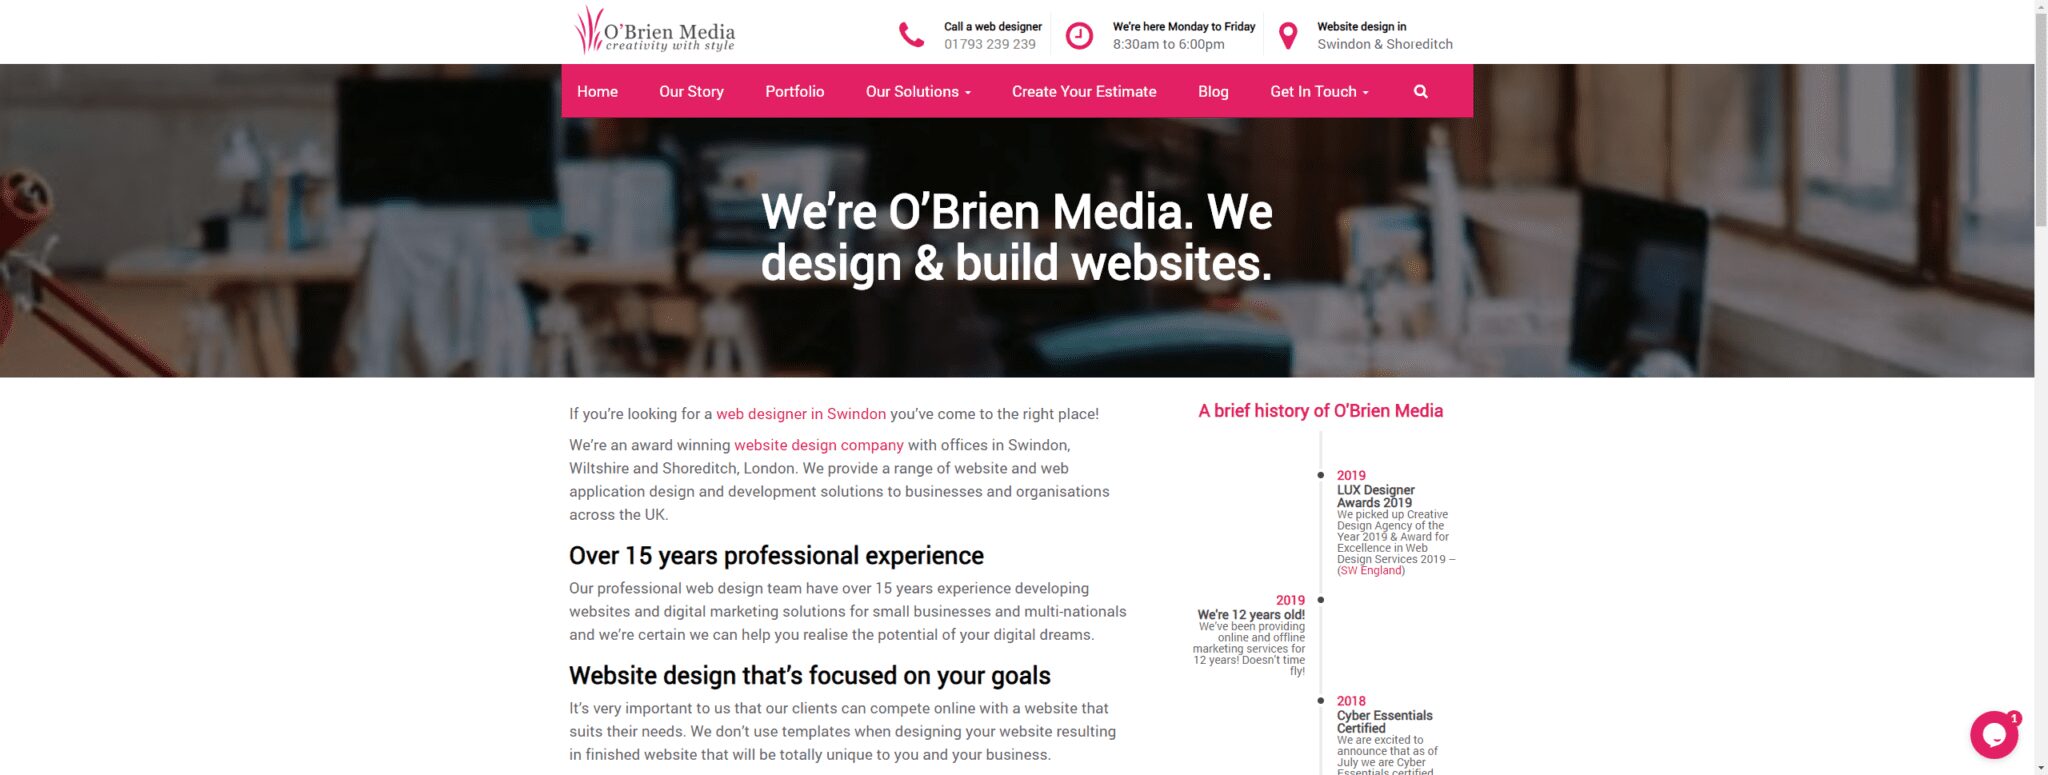 OBrien Media page